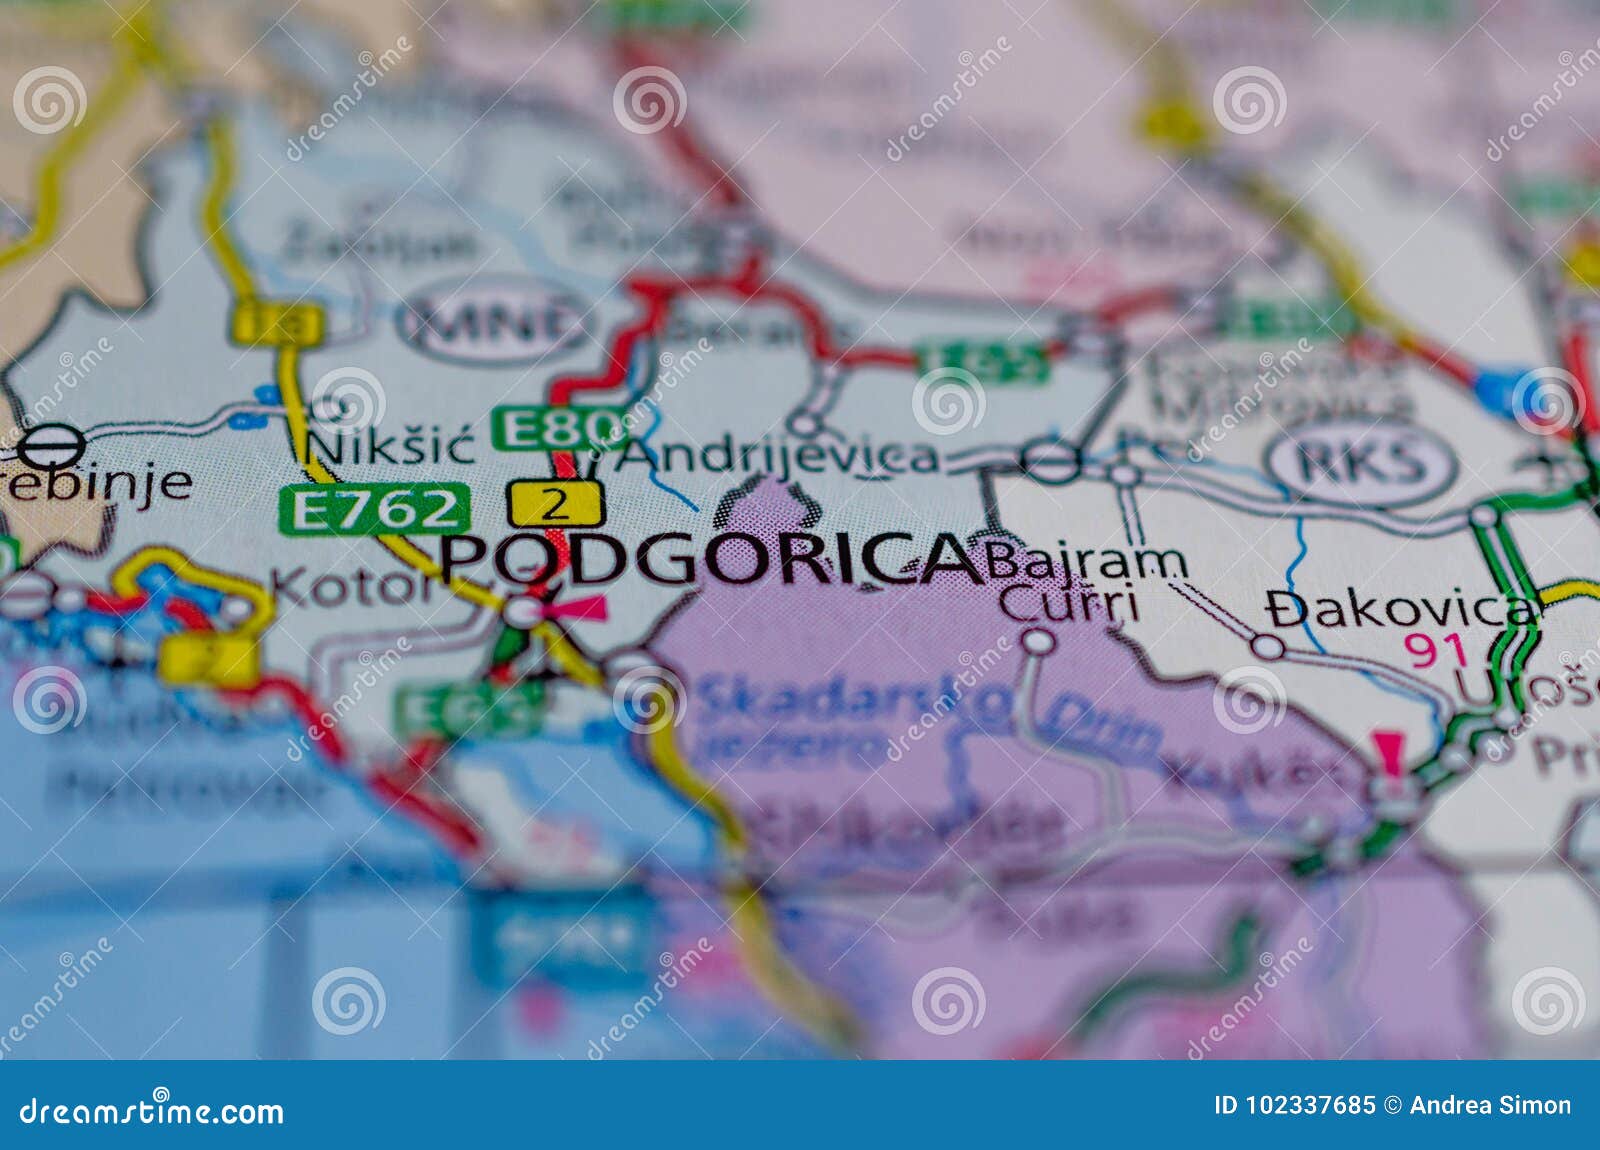 podgorica on map